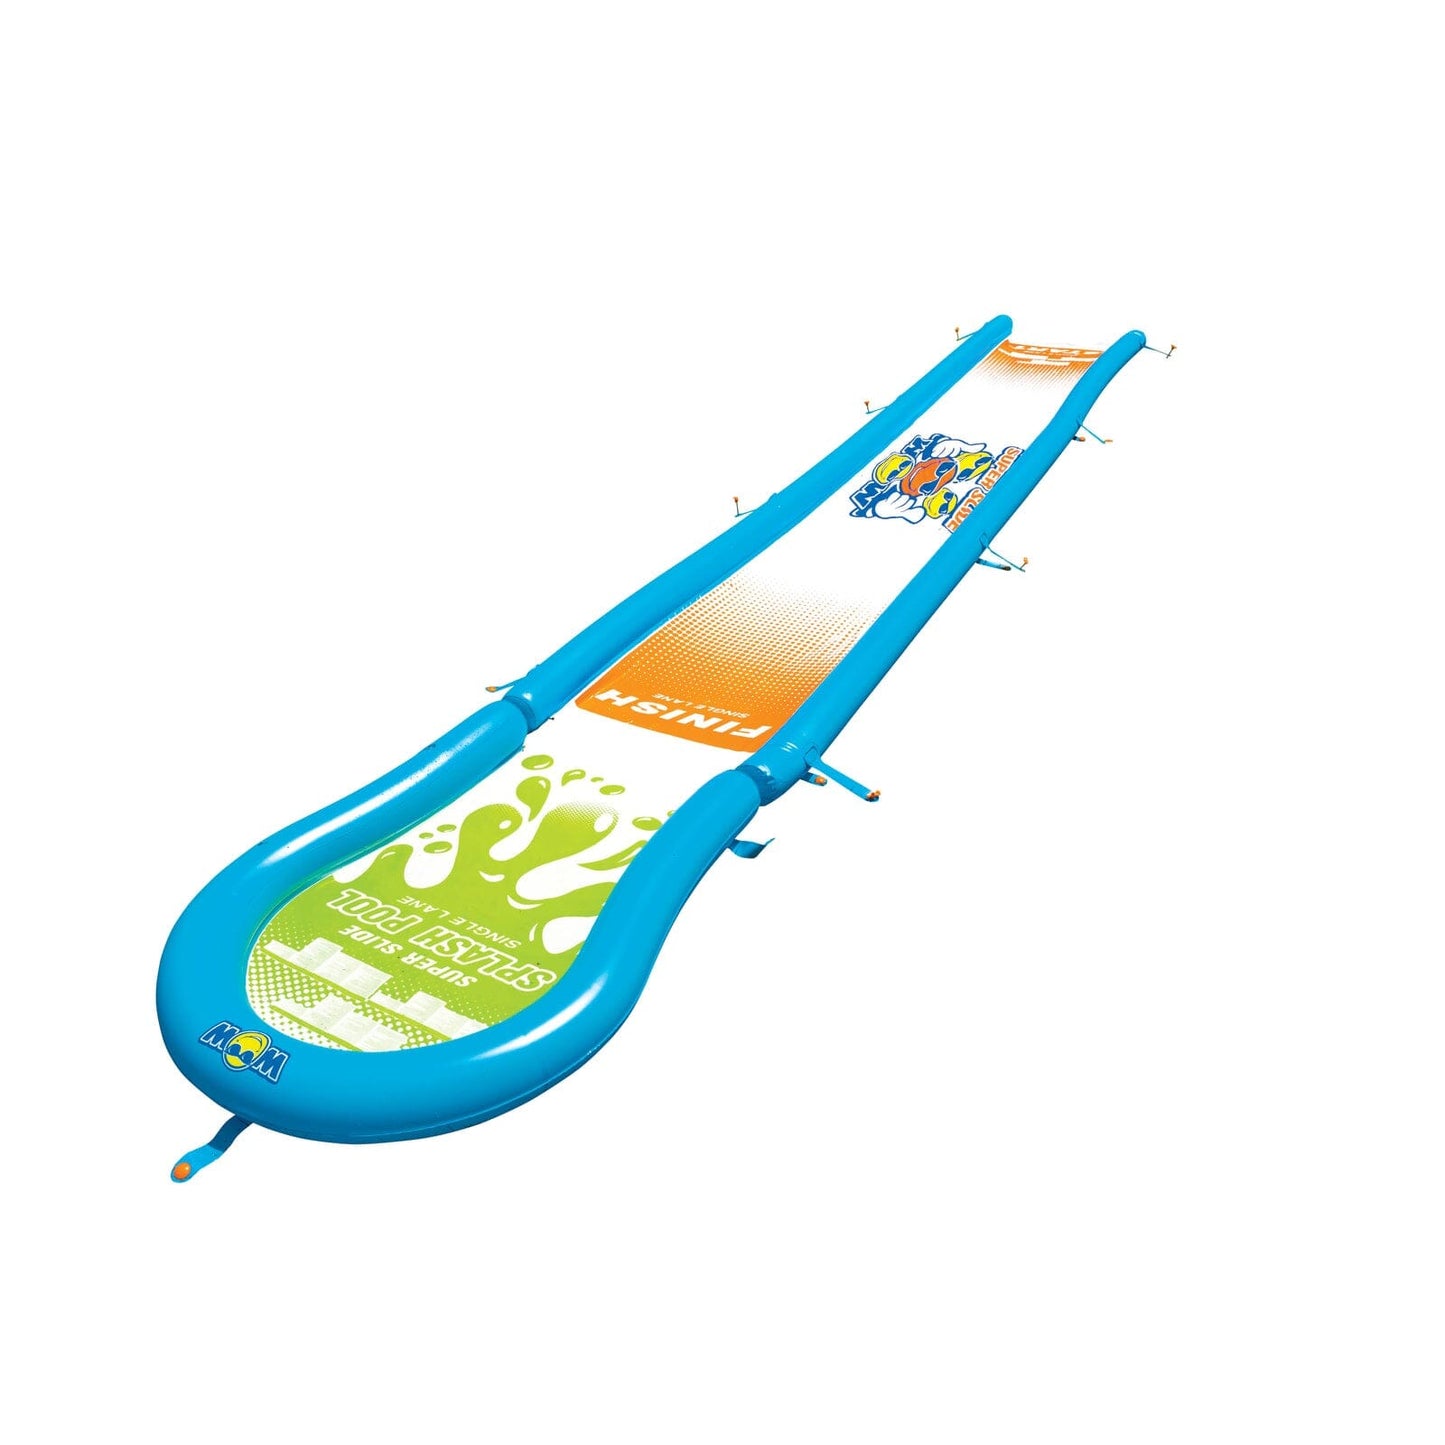 Single Lane Slide w/attached pool